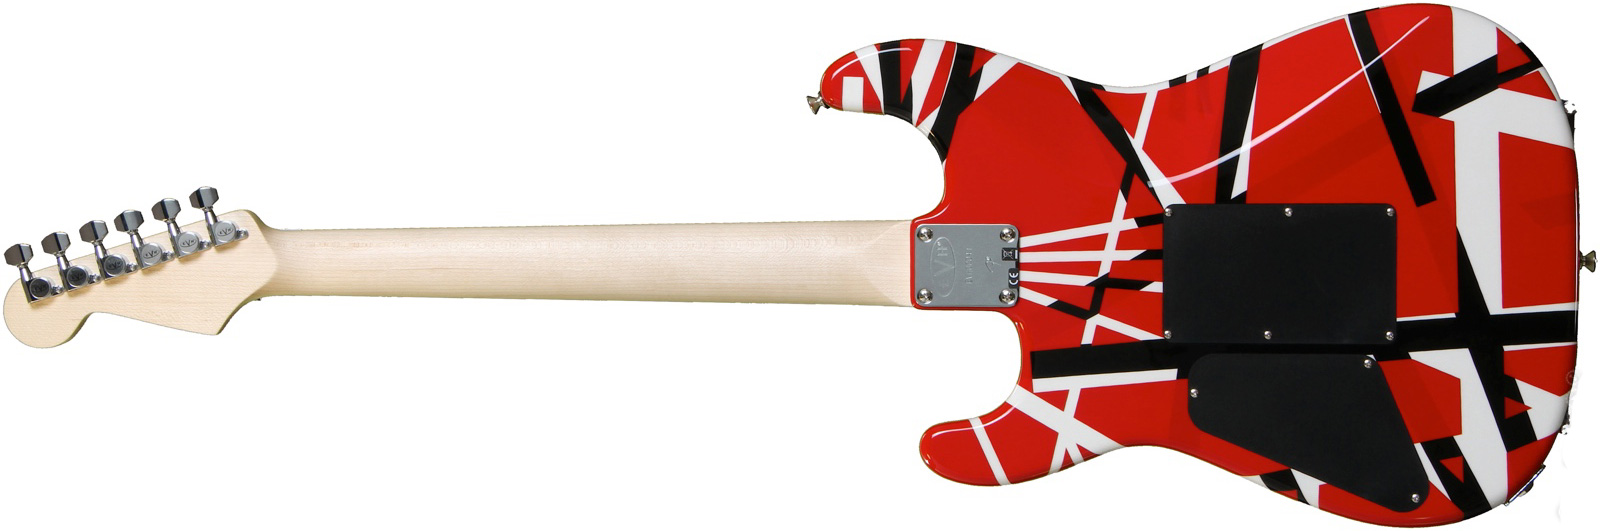 Evh Striped Series - Red With Black Stripes - Str shape electric guitar - Variation 3